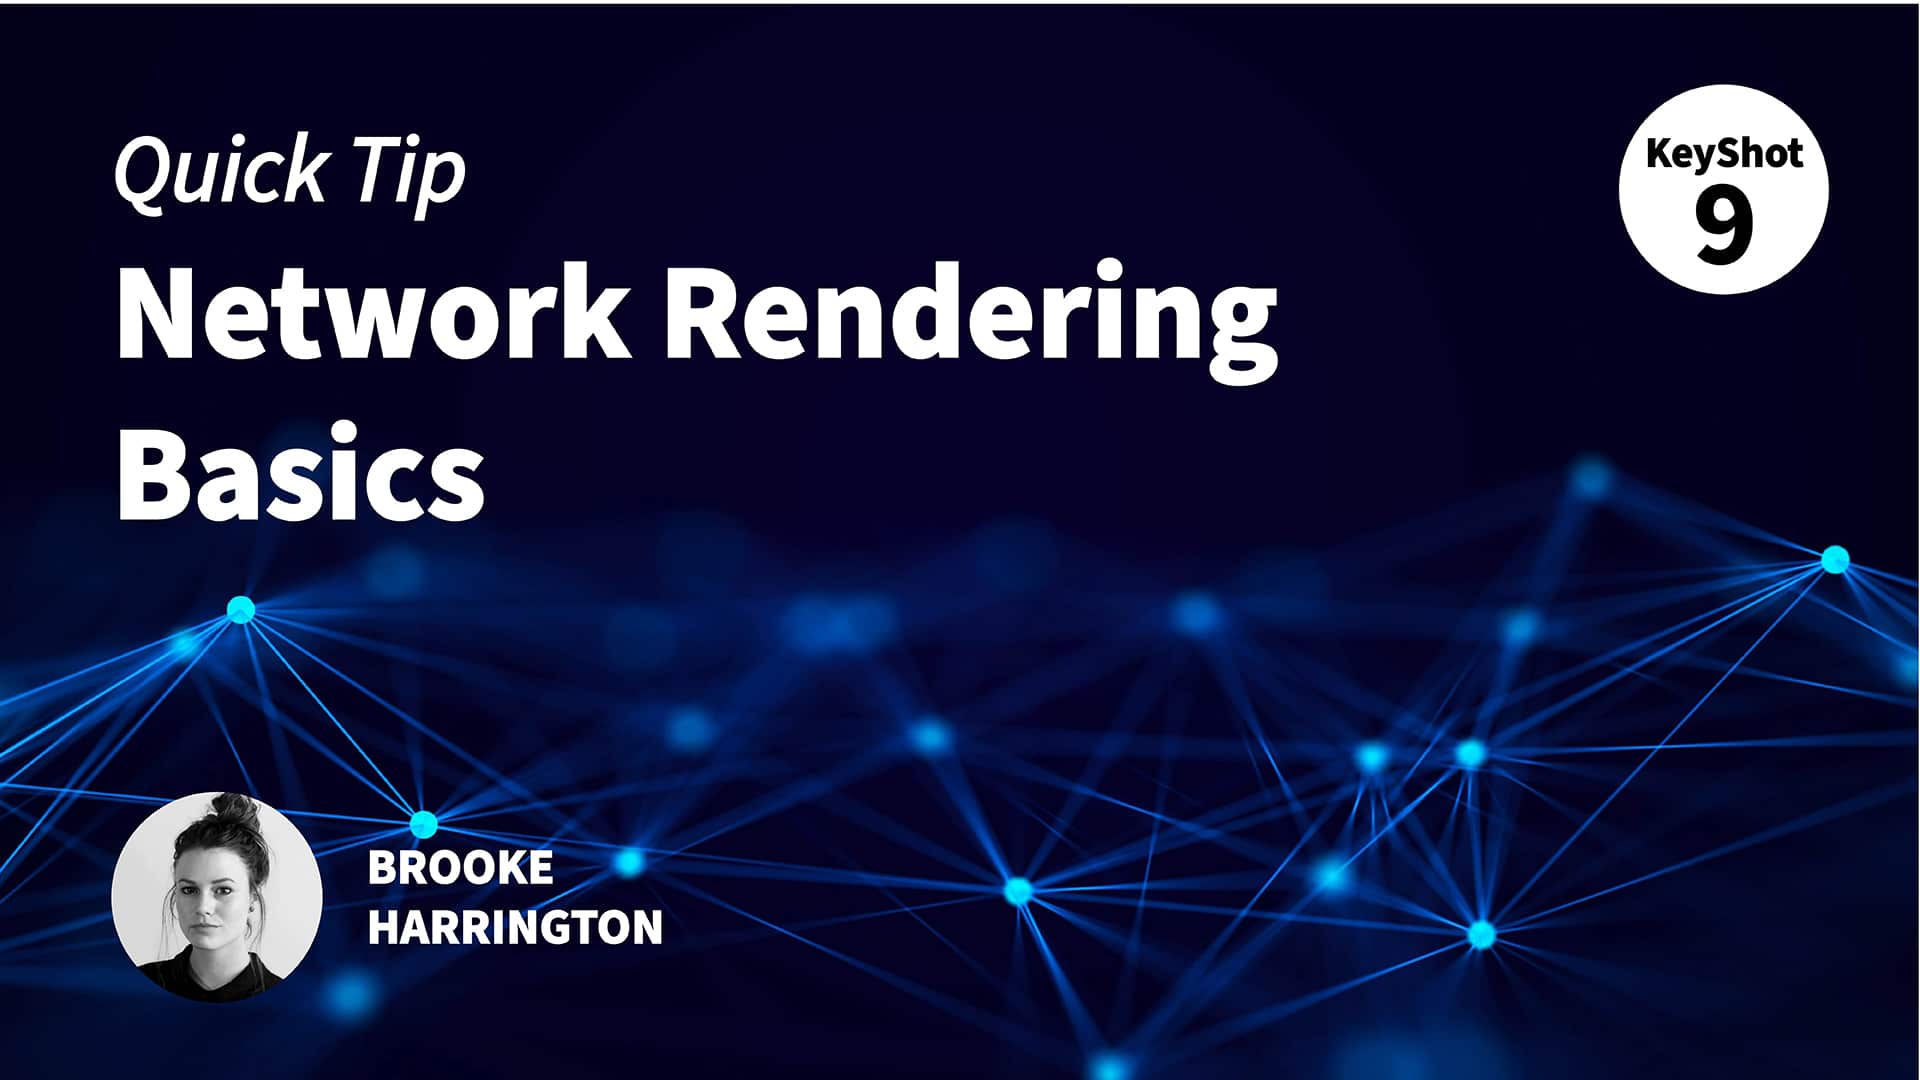 Quick Tip 102: KeyShot Network Rendering Basics